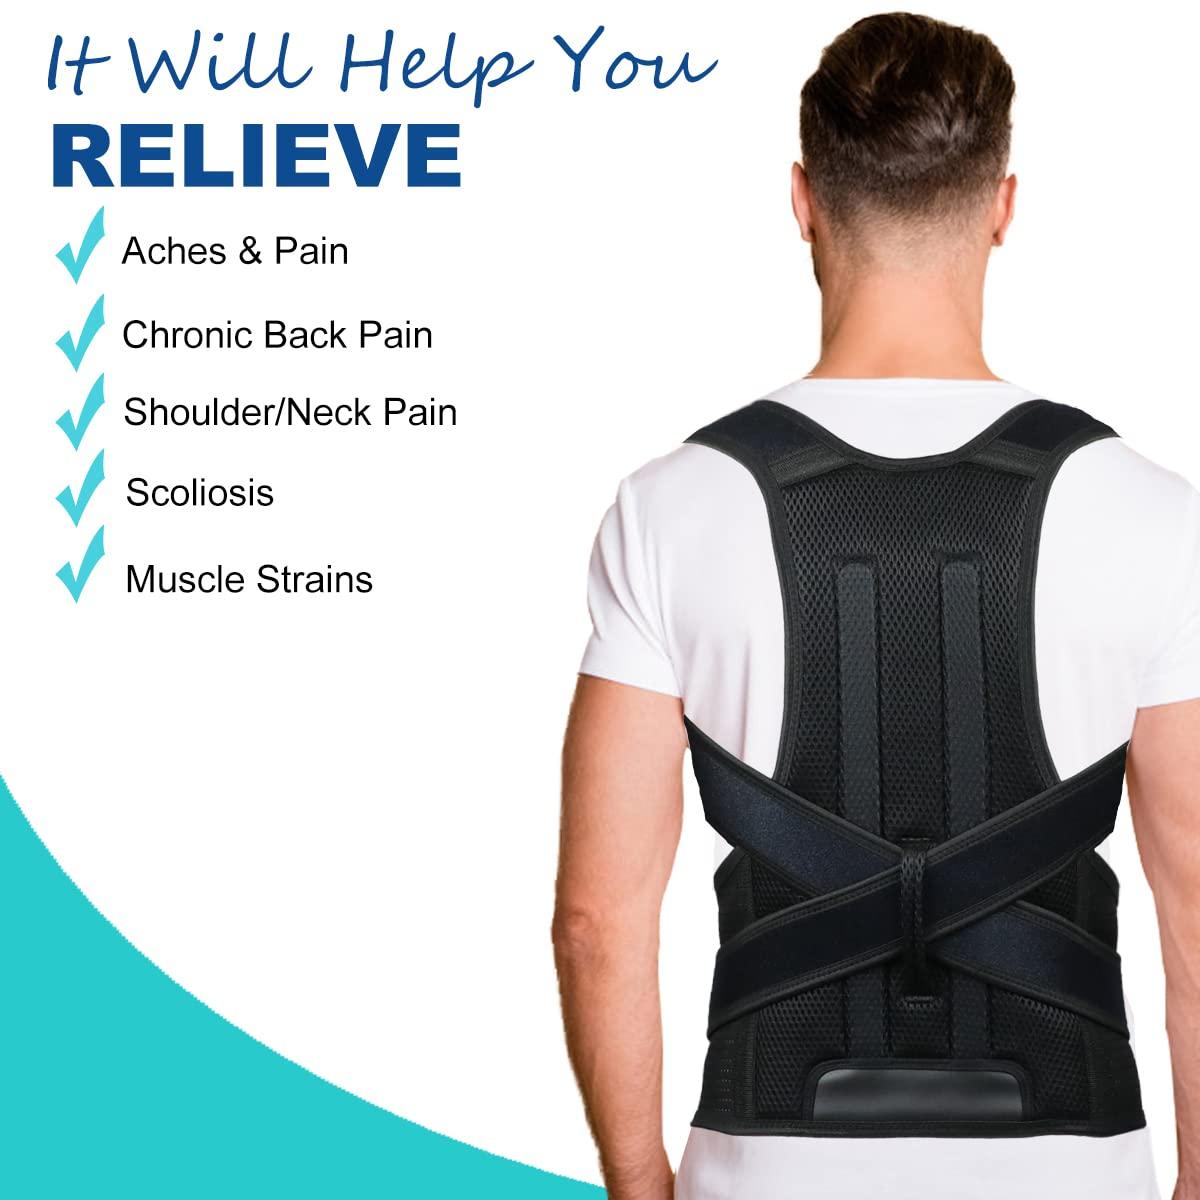 Body posture corrector belt, posture support brace, shoulder support relief  and back pain relief belt - for men and women